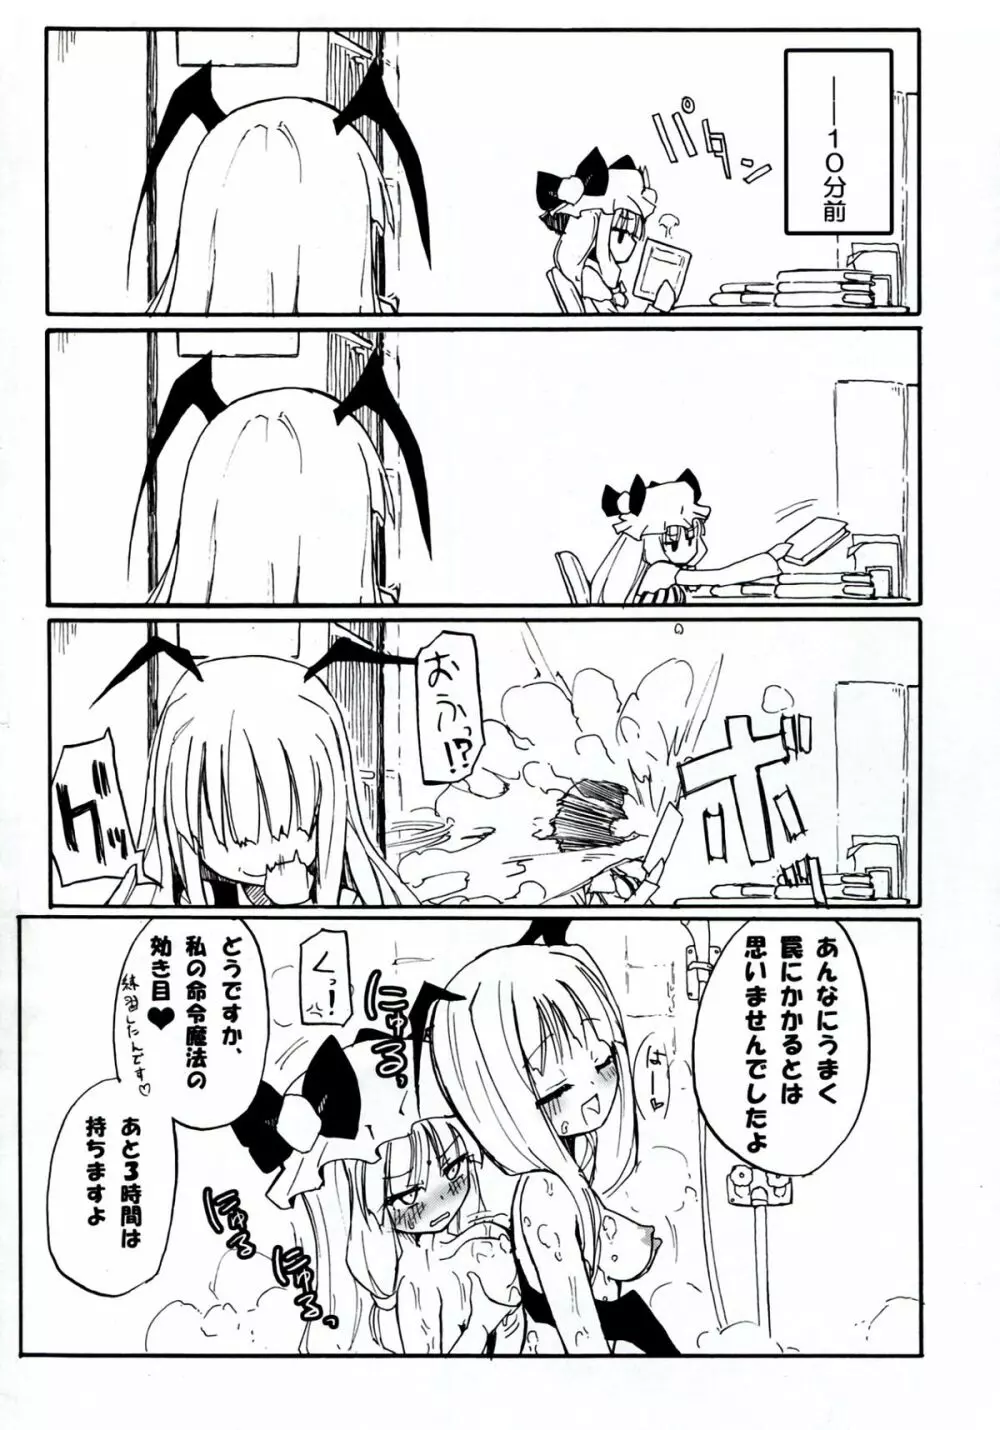 Homuraya Milk ★ Collection 2 - page57